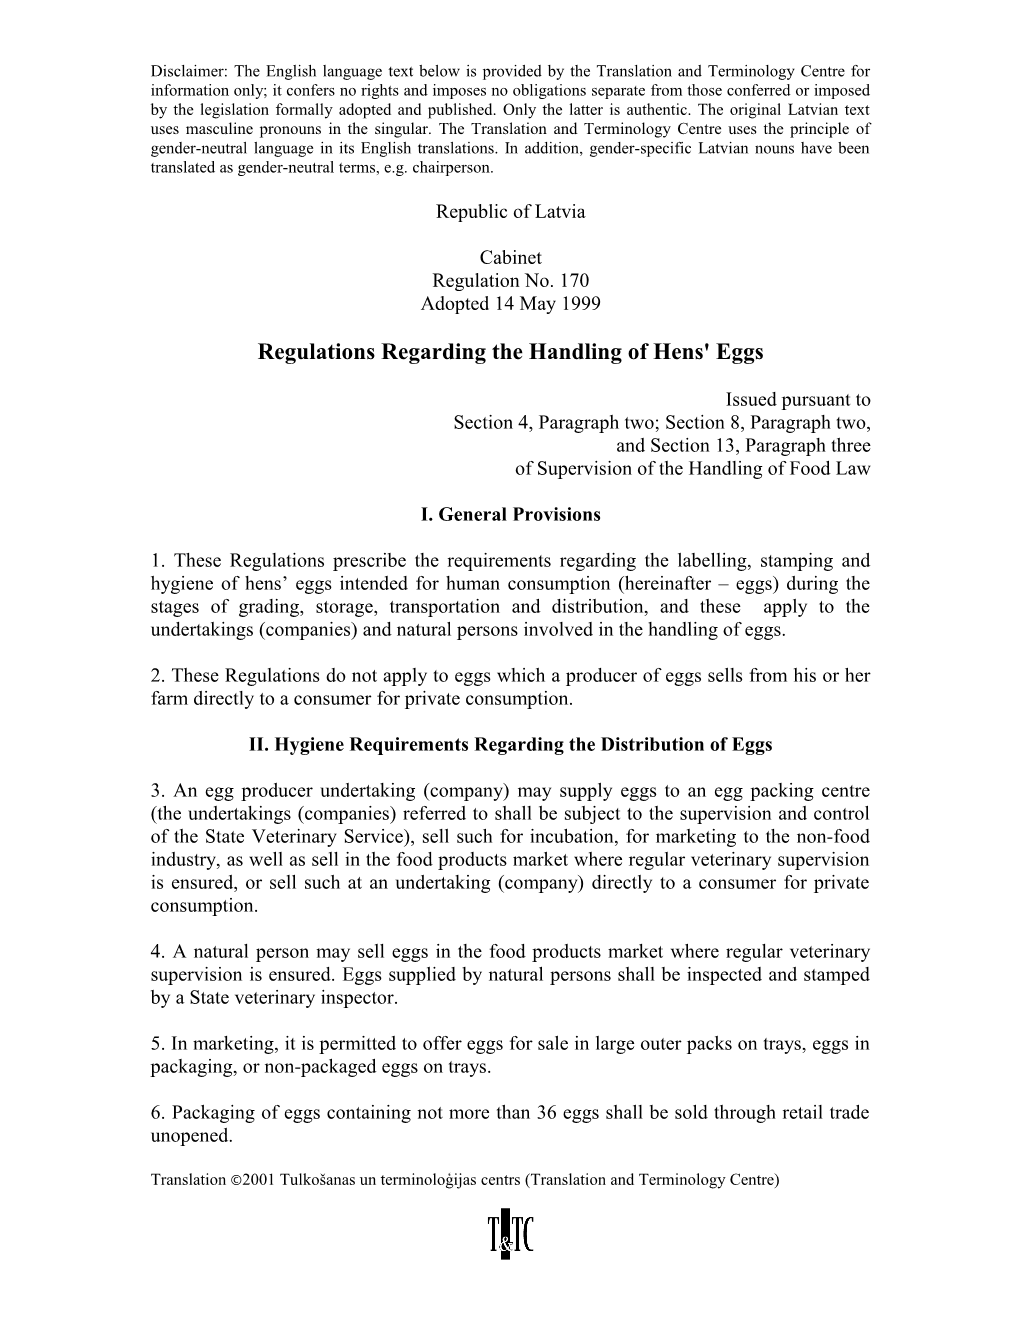 Regulations Regarding the Handling of Hens' Eggs